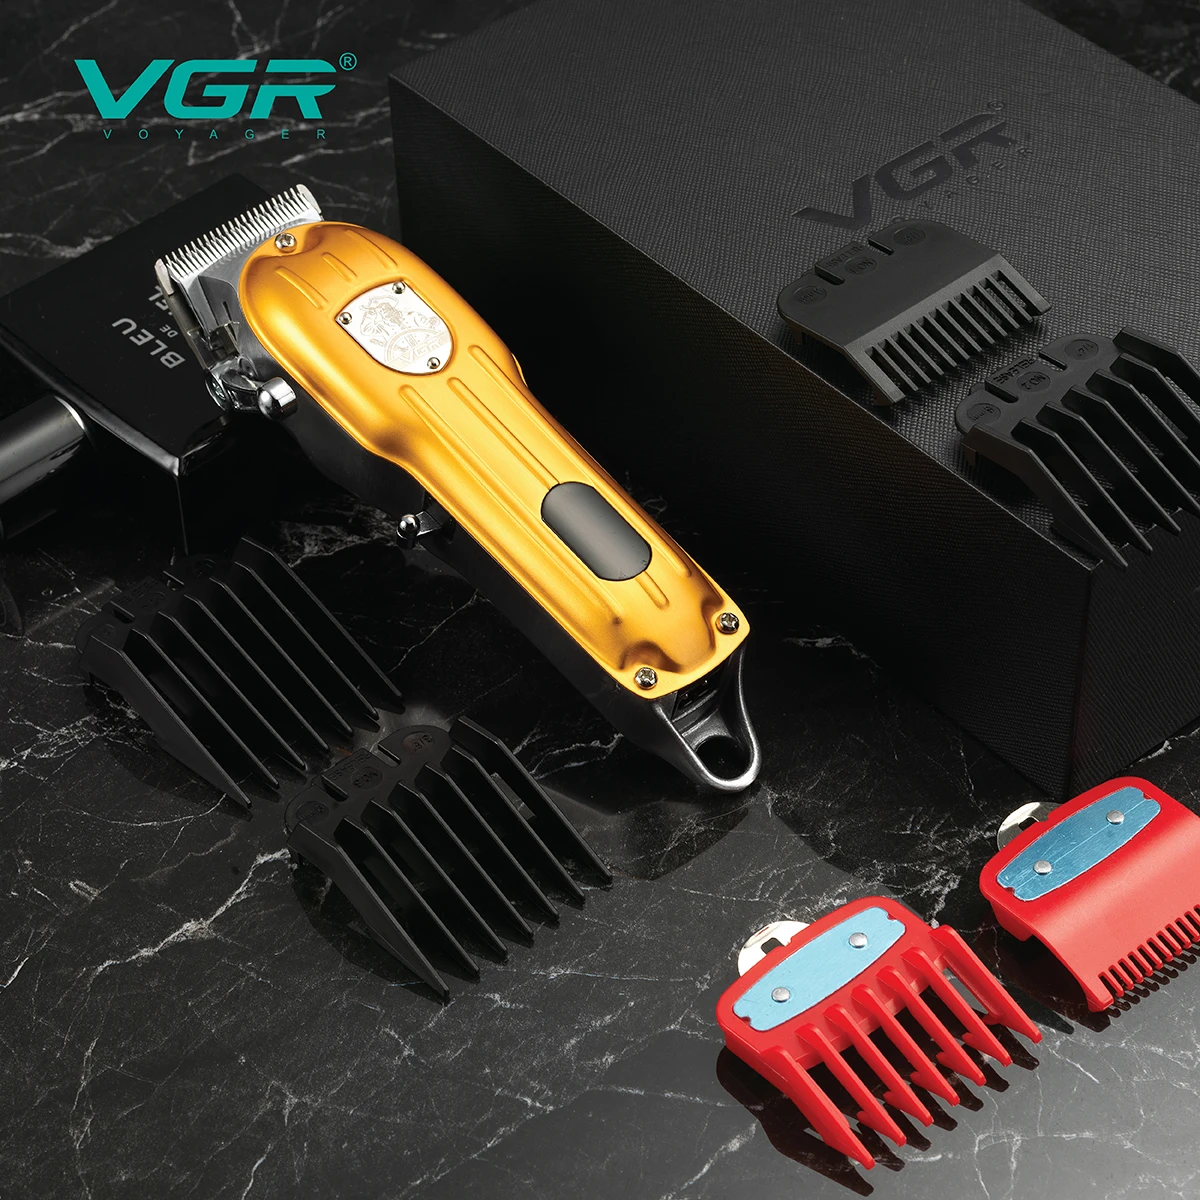 VGR שיער גוזז שיער מקצועי גוזם אלחוטי שיער מכונת חיתוך חשמלי הספר תצוגה דיגיטלית קליפר לגברים V-092 - 3